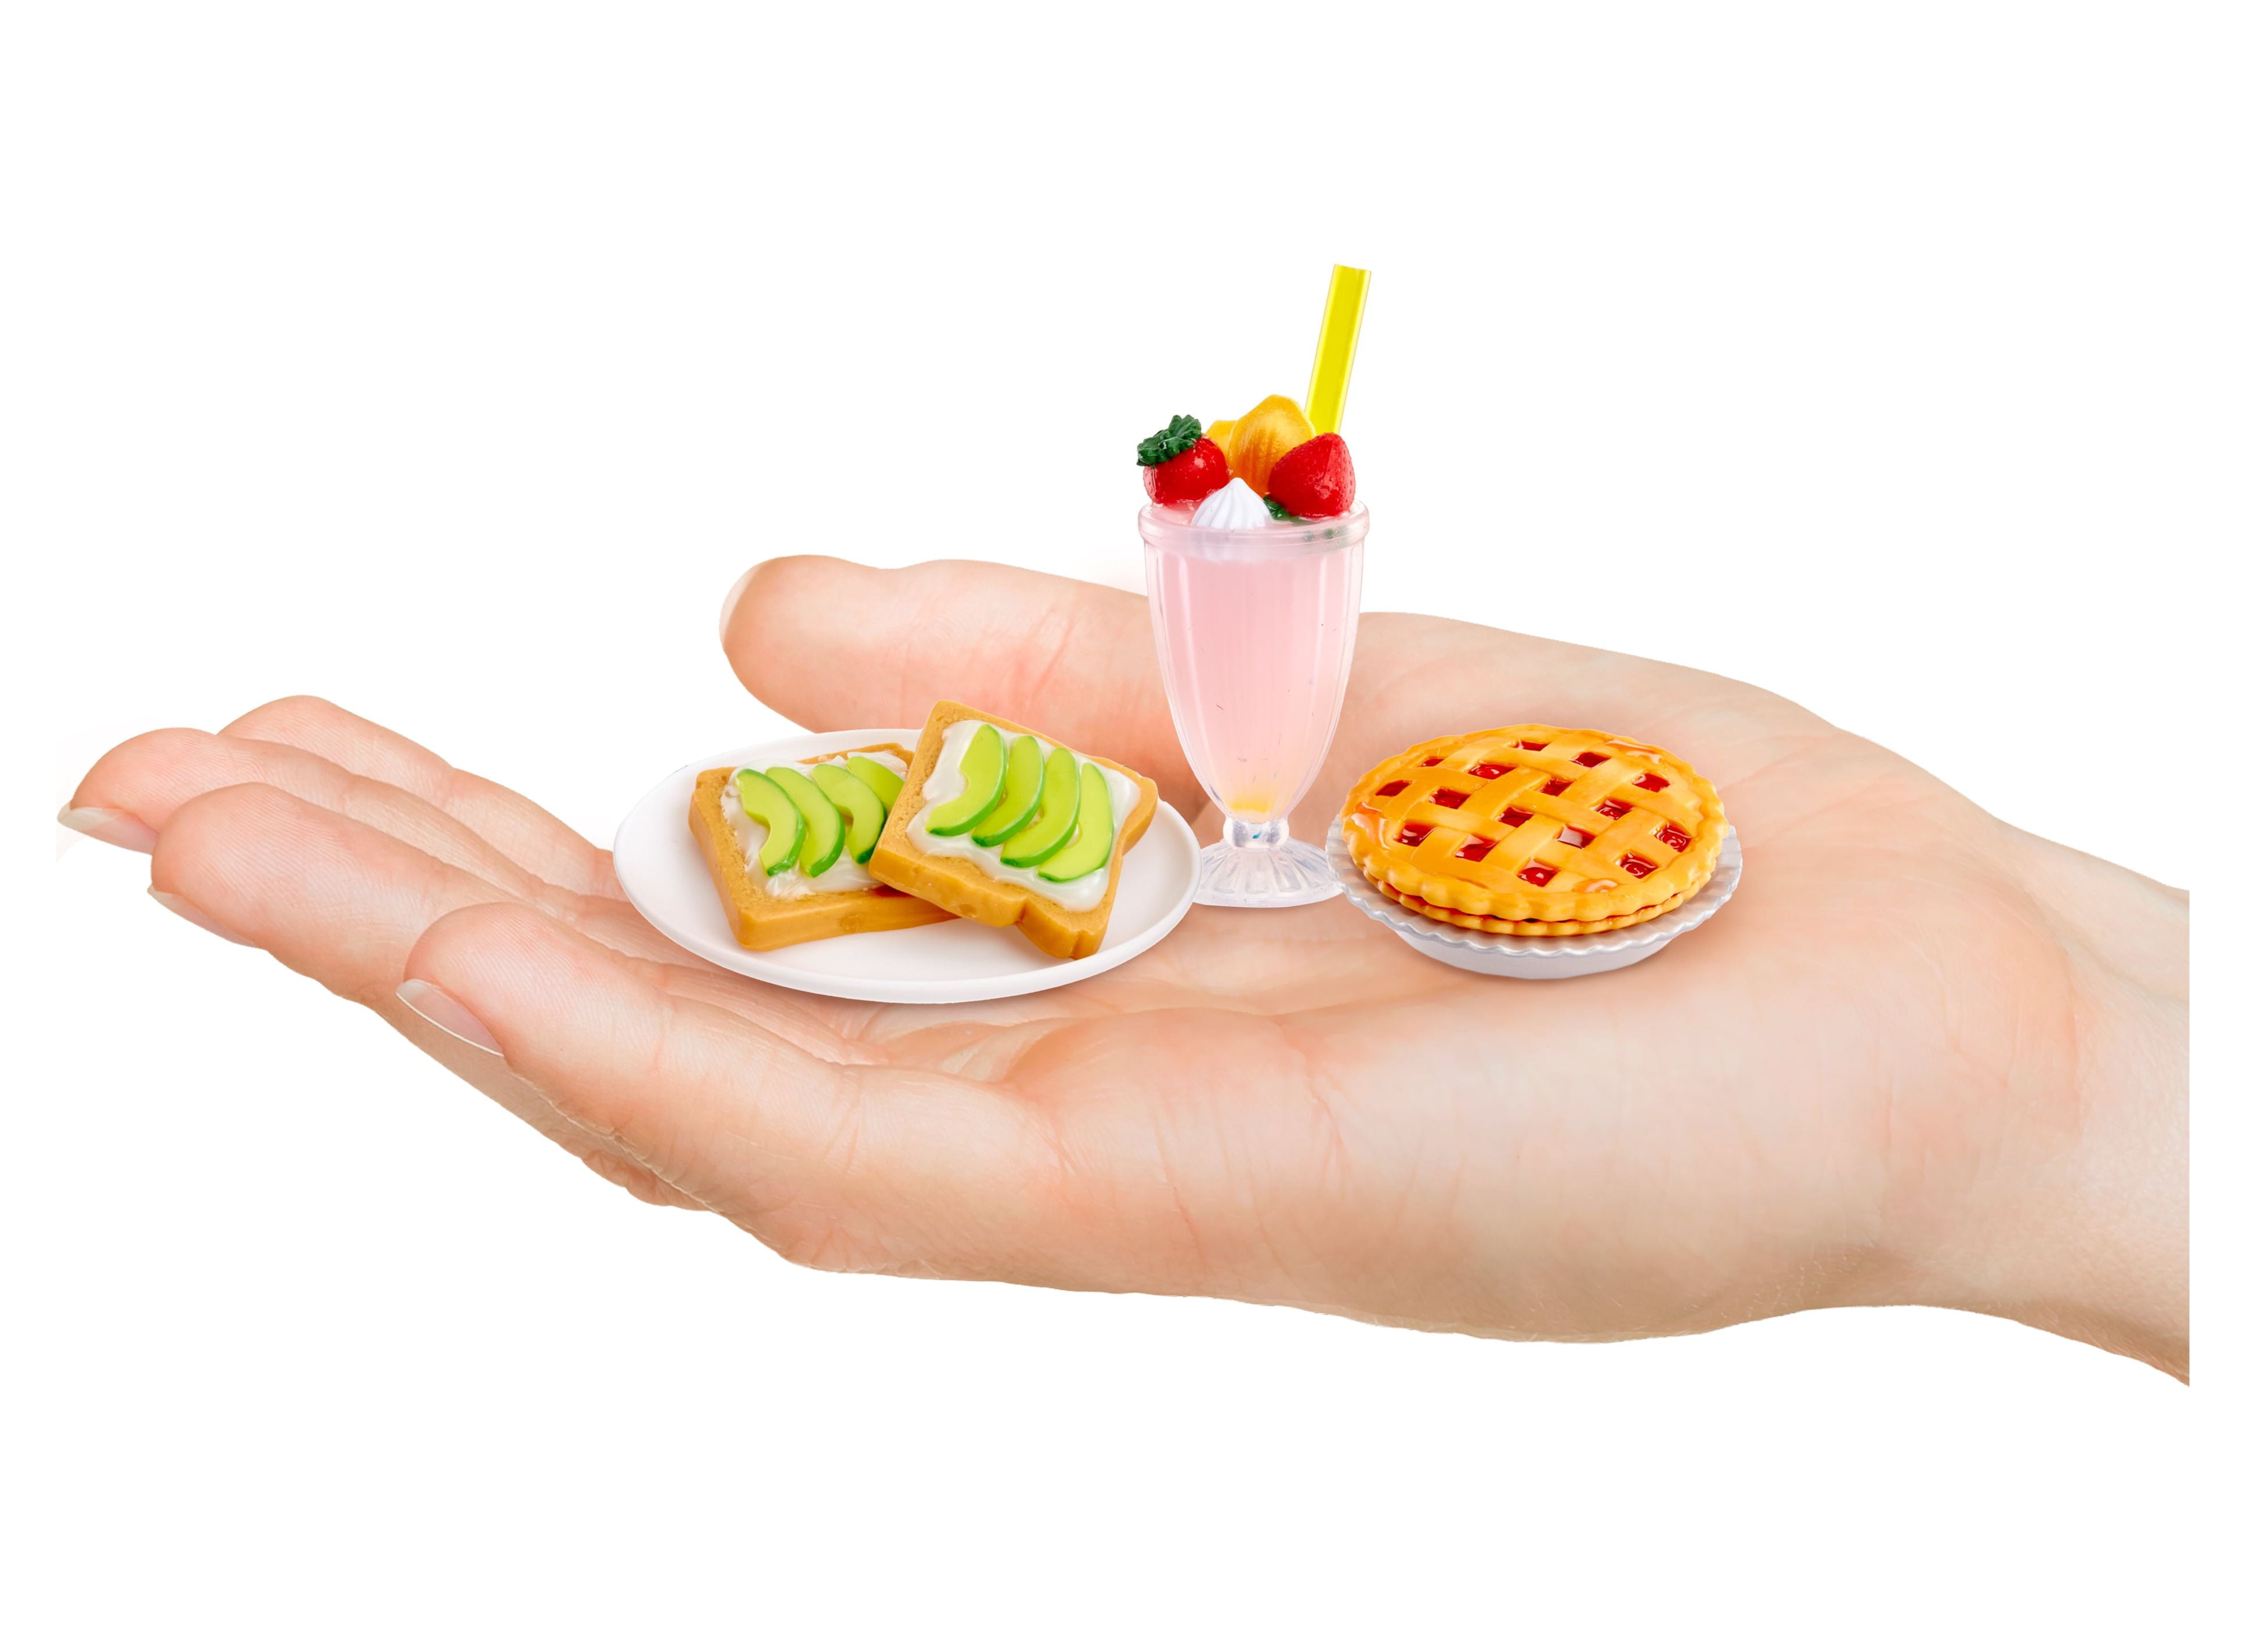 Miniverse Make It Mini Food DINER HOLIDAY Mystery Box 18 Packs MGA  Entertainment - ToyWiz